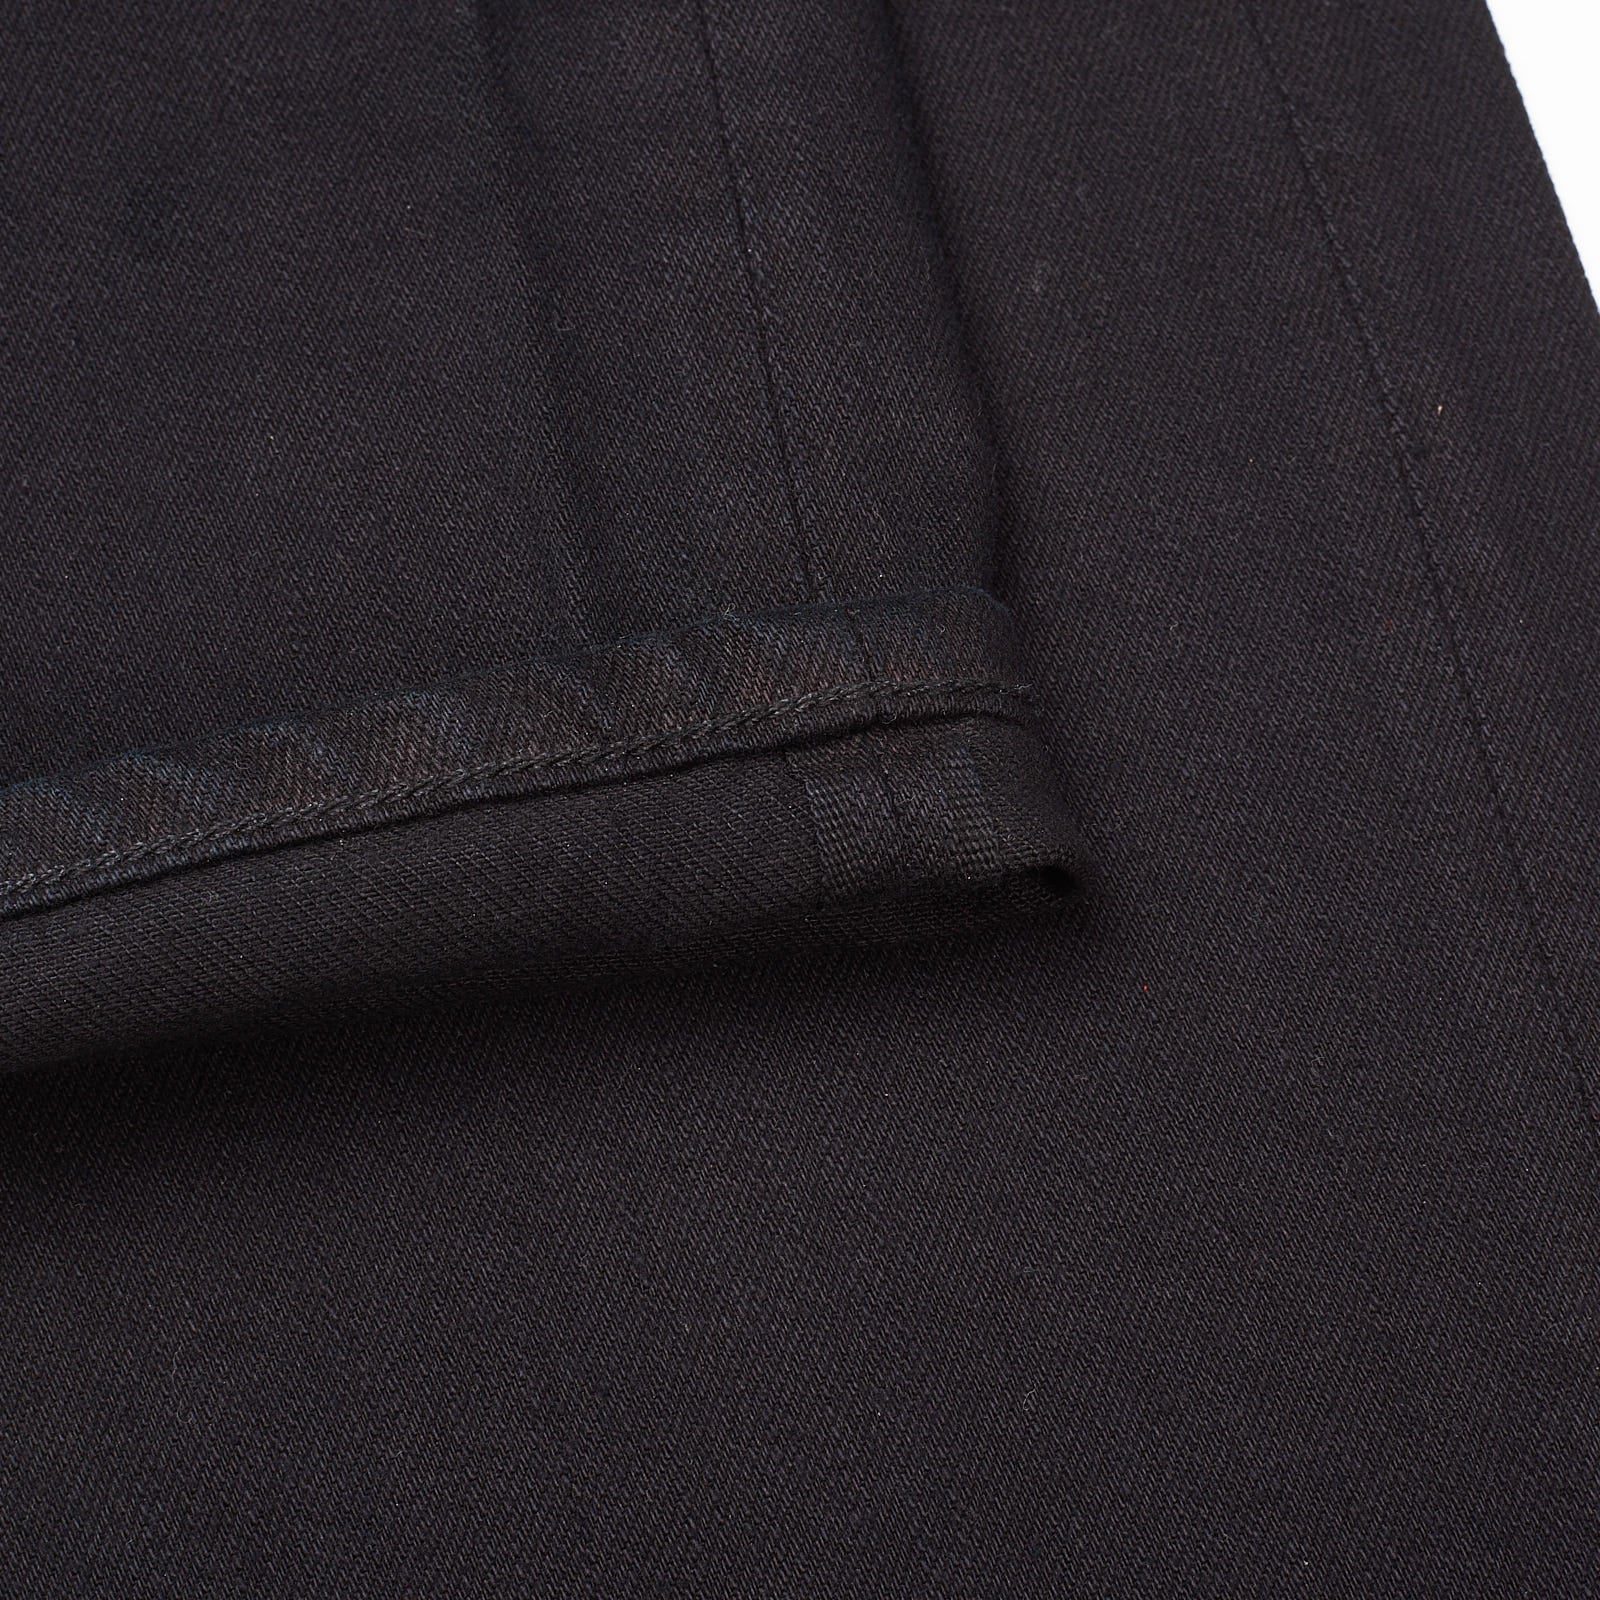 3x1 NYC M3 Black Denim Straight Fit Jeans Pants Garment Dyed US 36 NEW 3X1